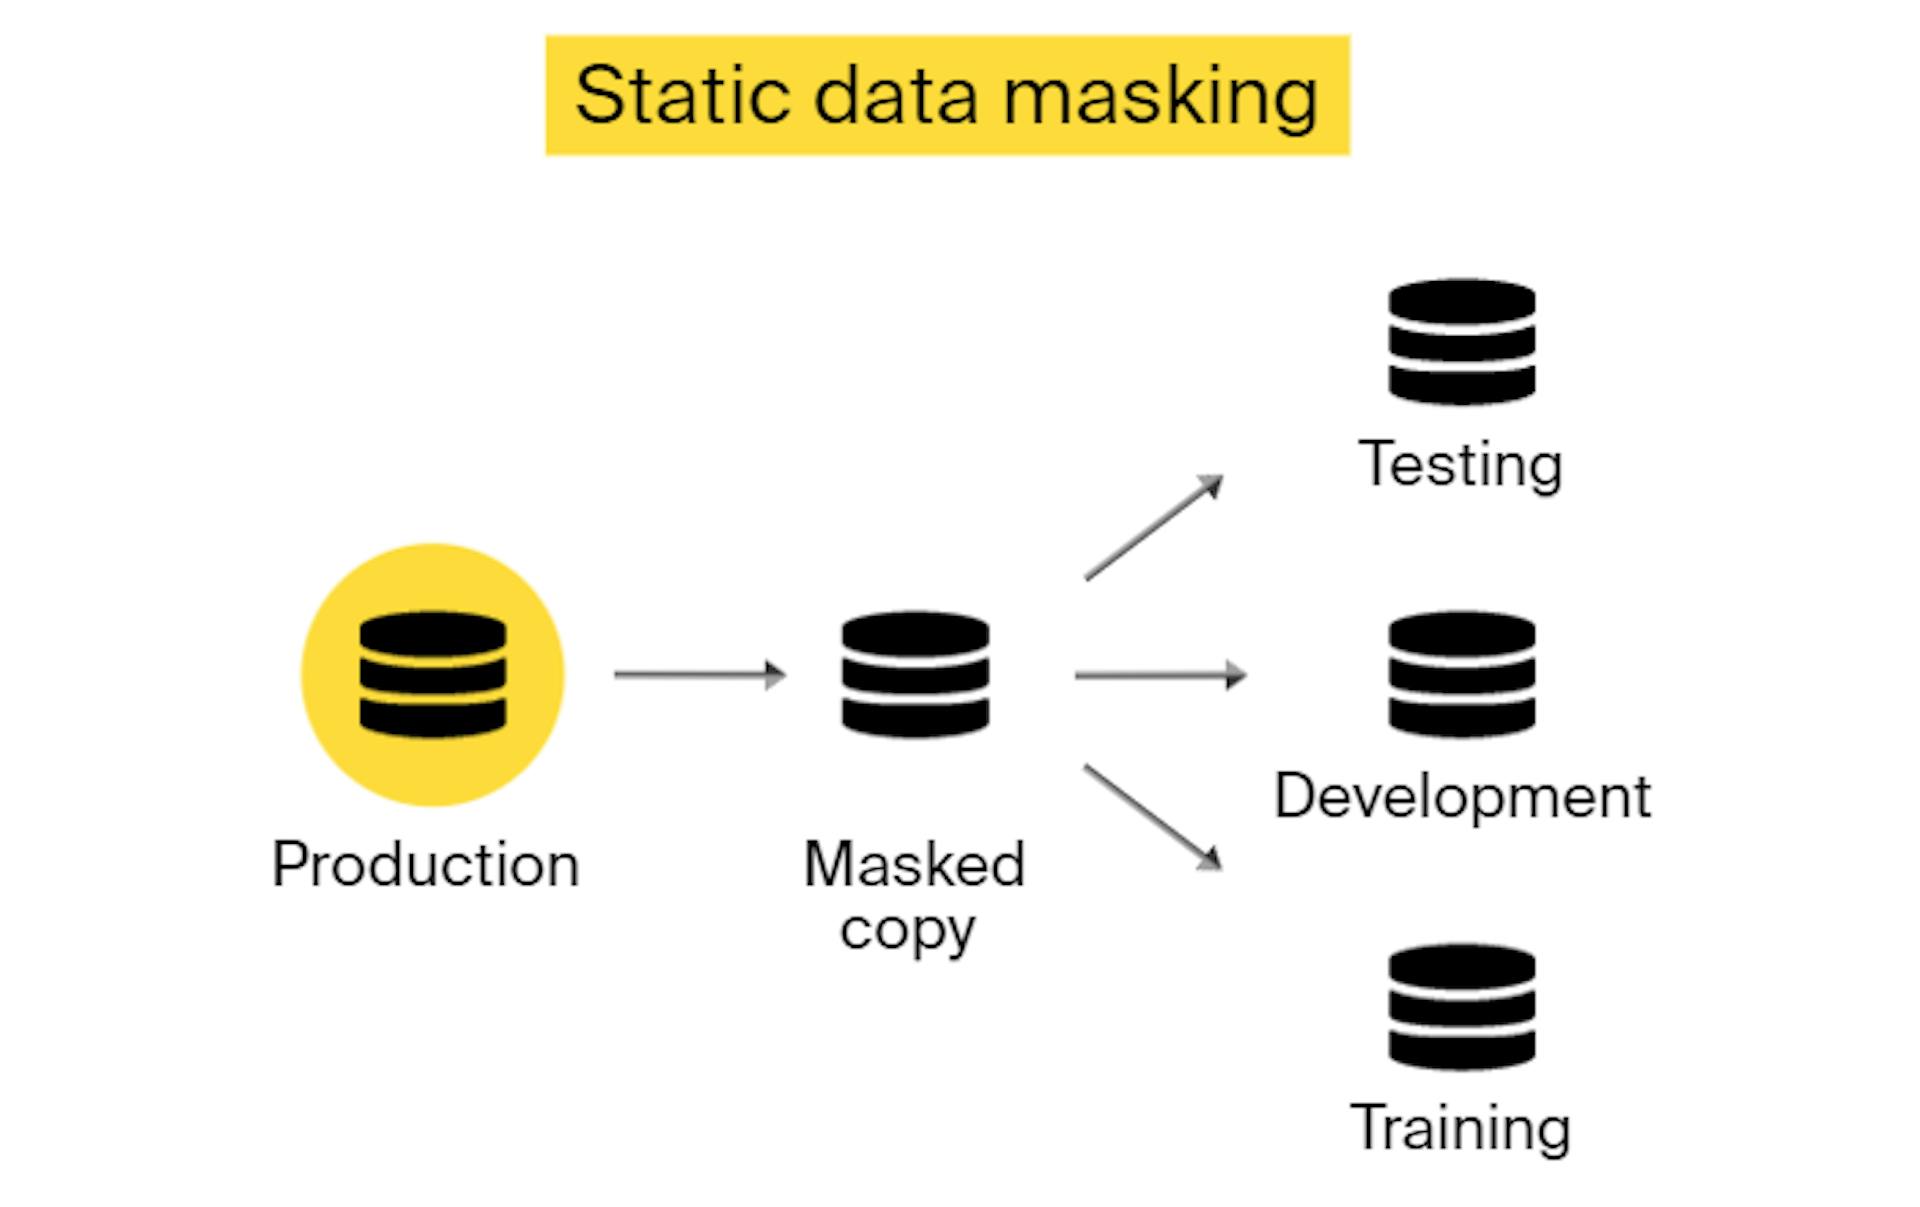 Static data masking